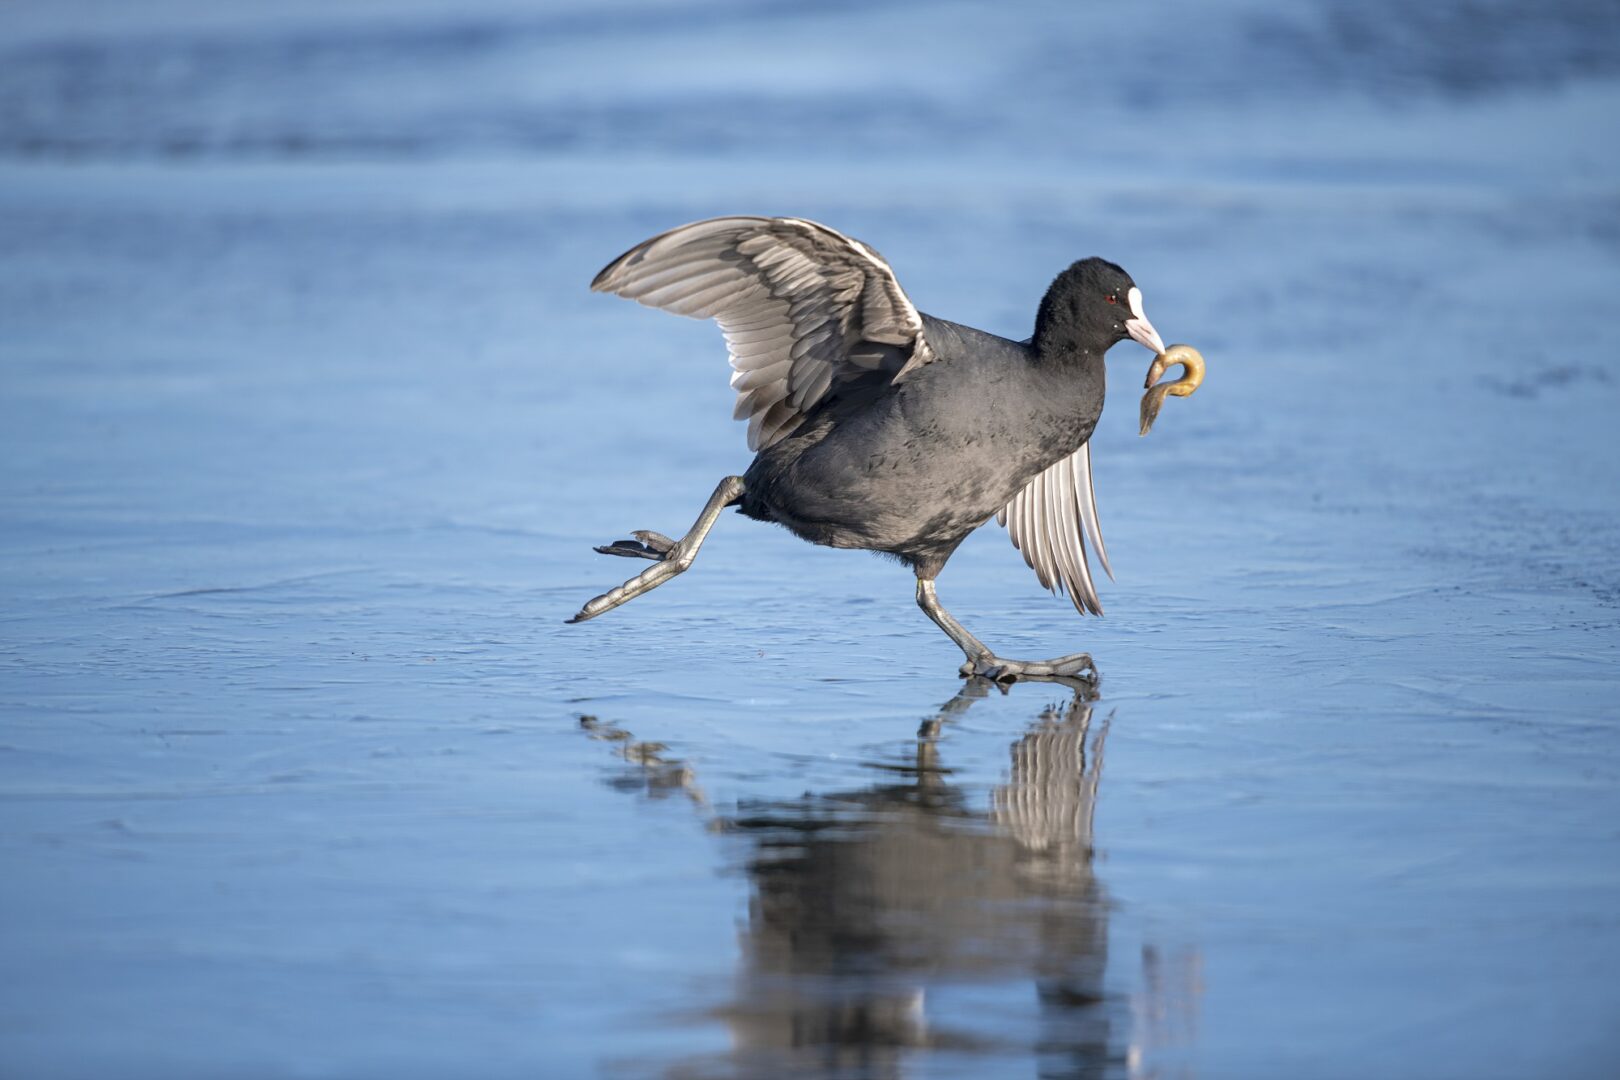 Image of Coot Bird on Ice